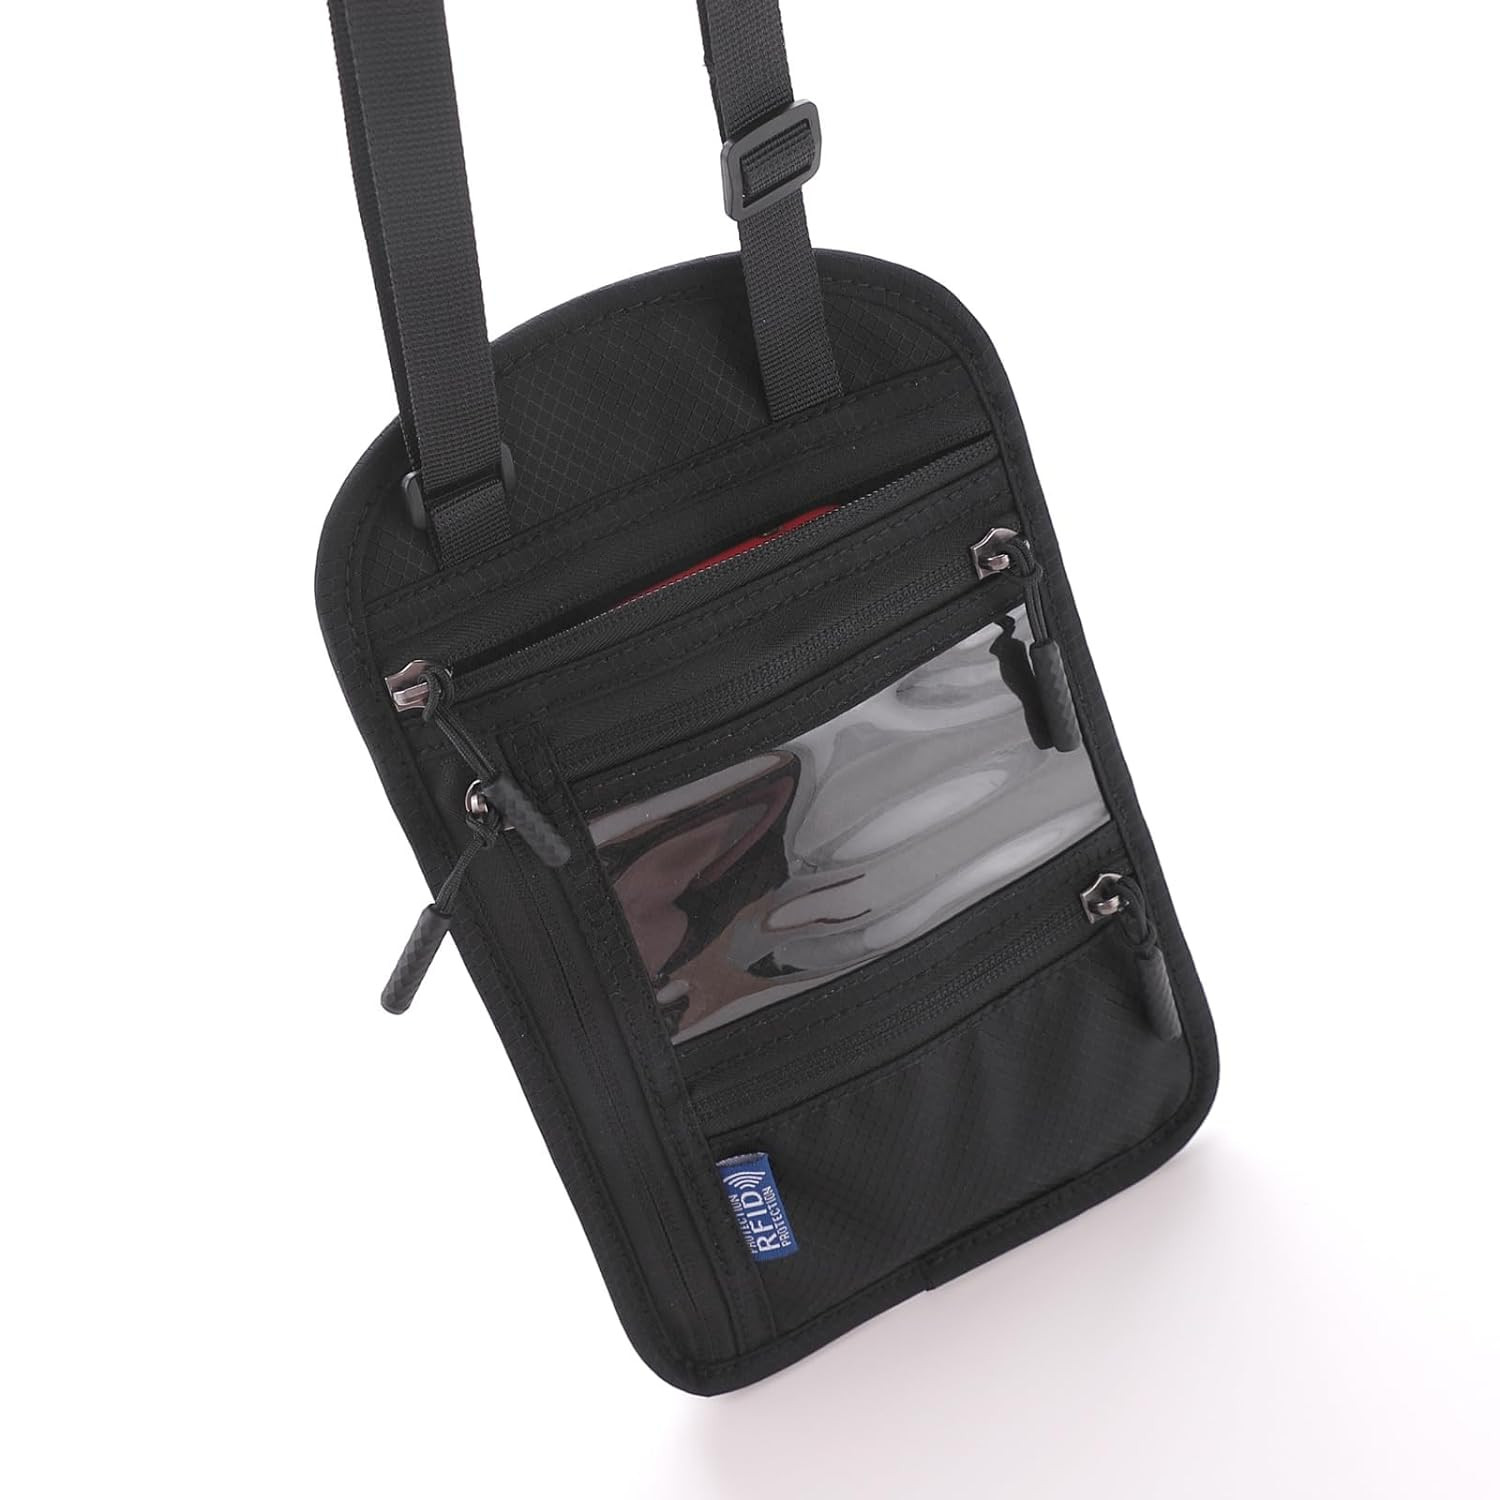 Kuber Industries Paspport Holder for Men & Women|Multifunction Passport Cover Bag|Nylon Passport Pouch for Luggage (Black)